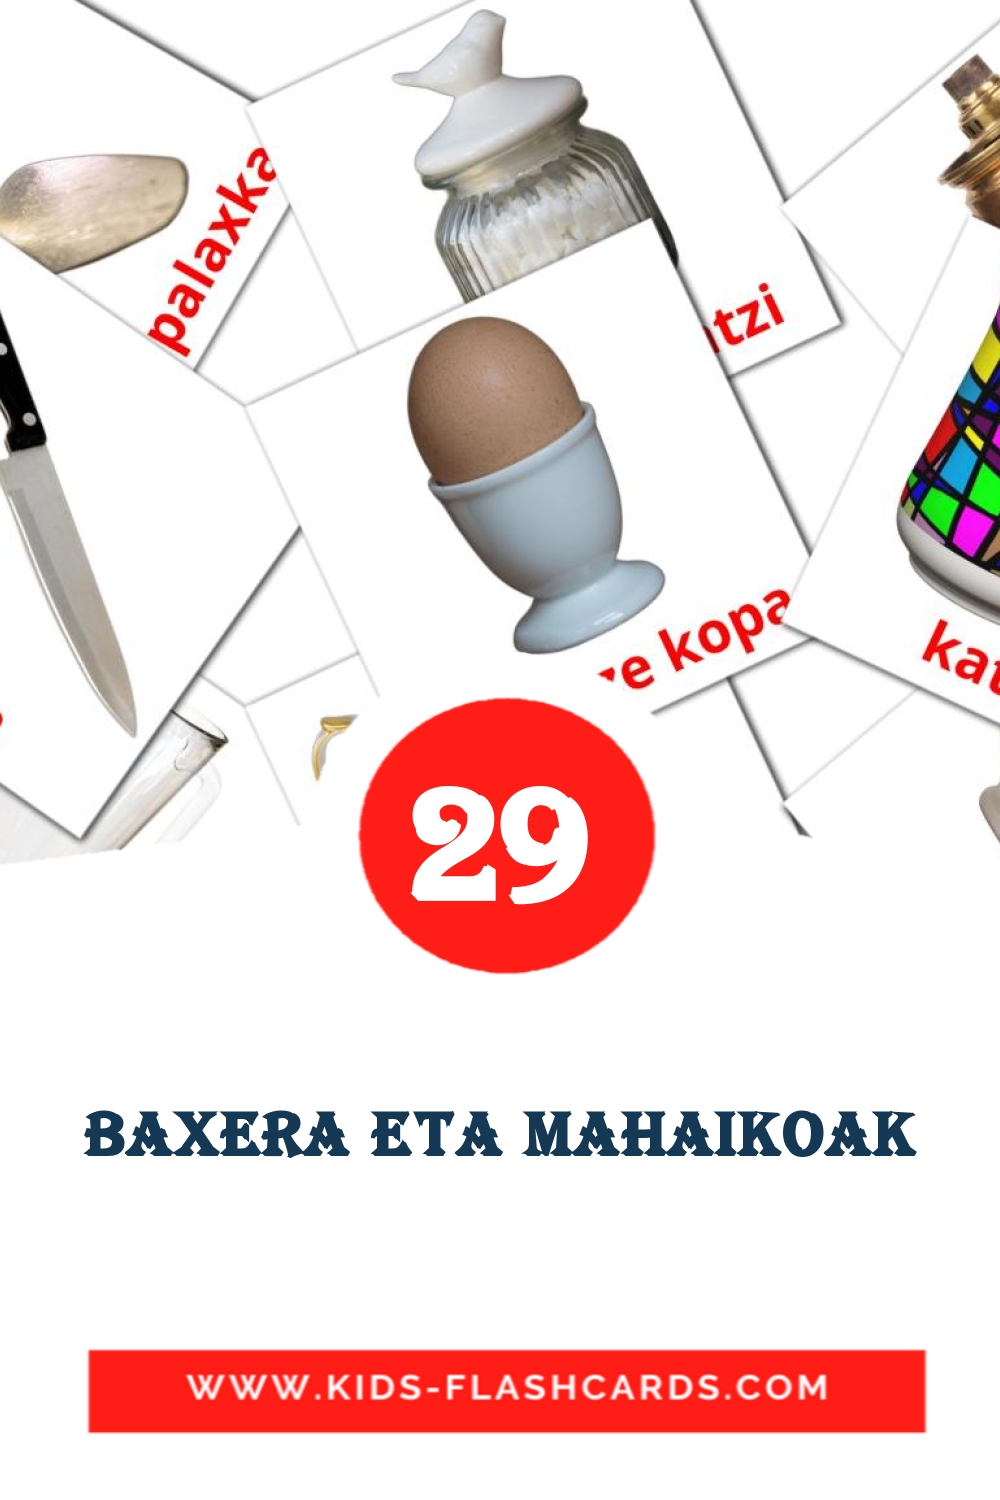 29 tarjetas didacticas de Baxera eta mahaikoak para el jardín de infancia en euskera